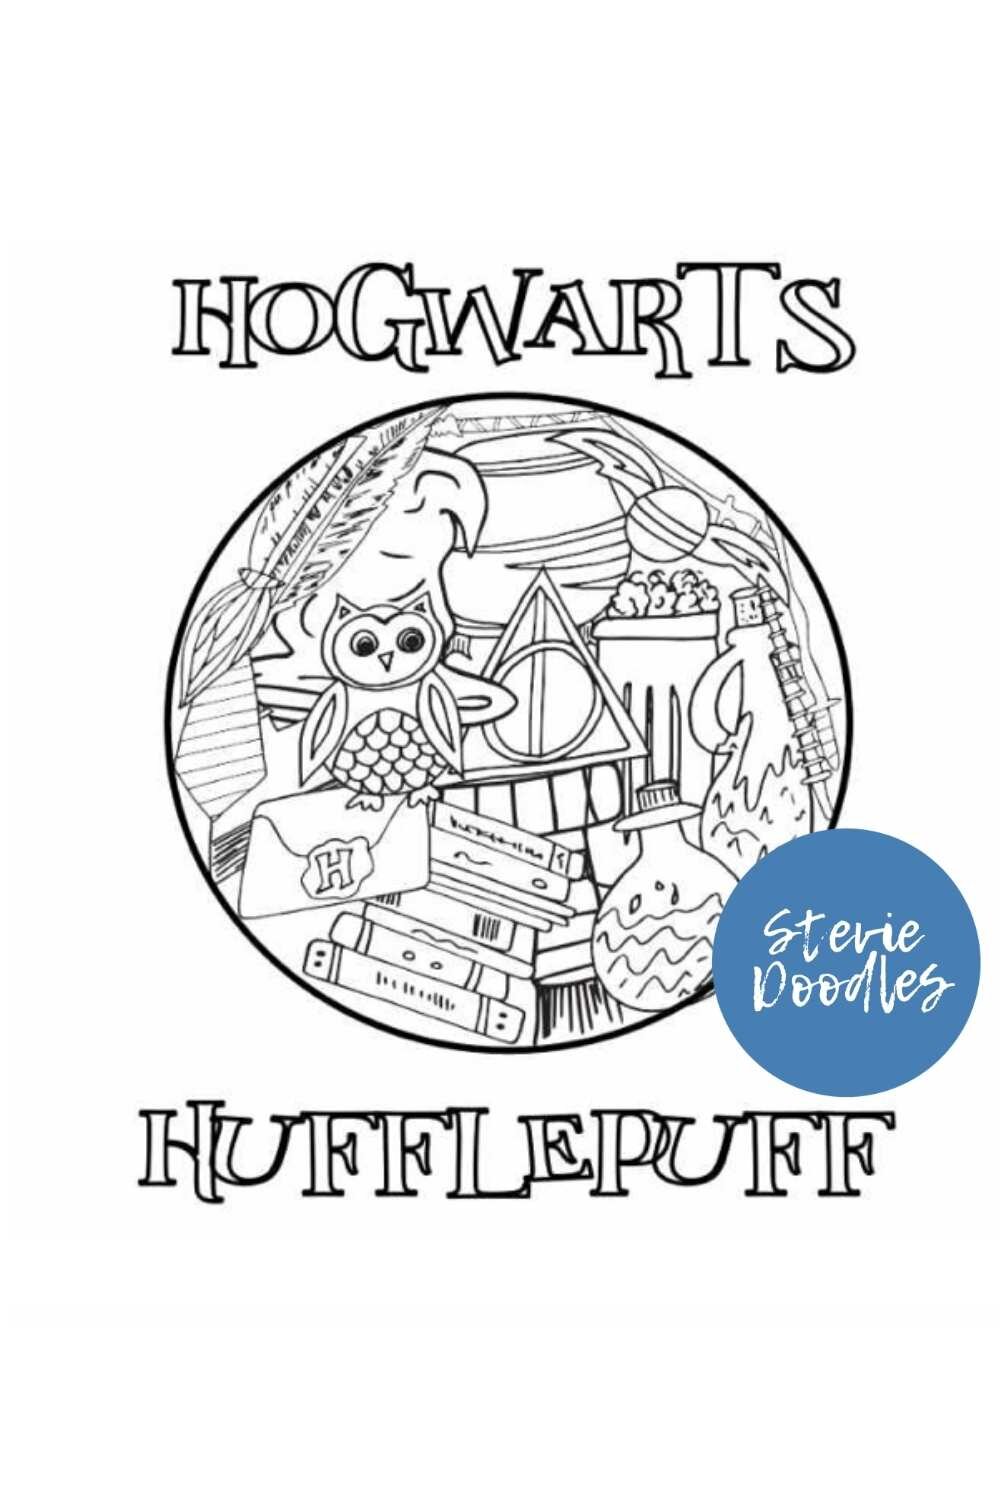 free printable hogwarts hufflepuff coloring page stevie doodles.jpg